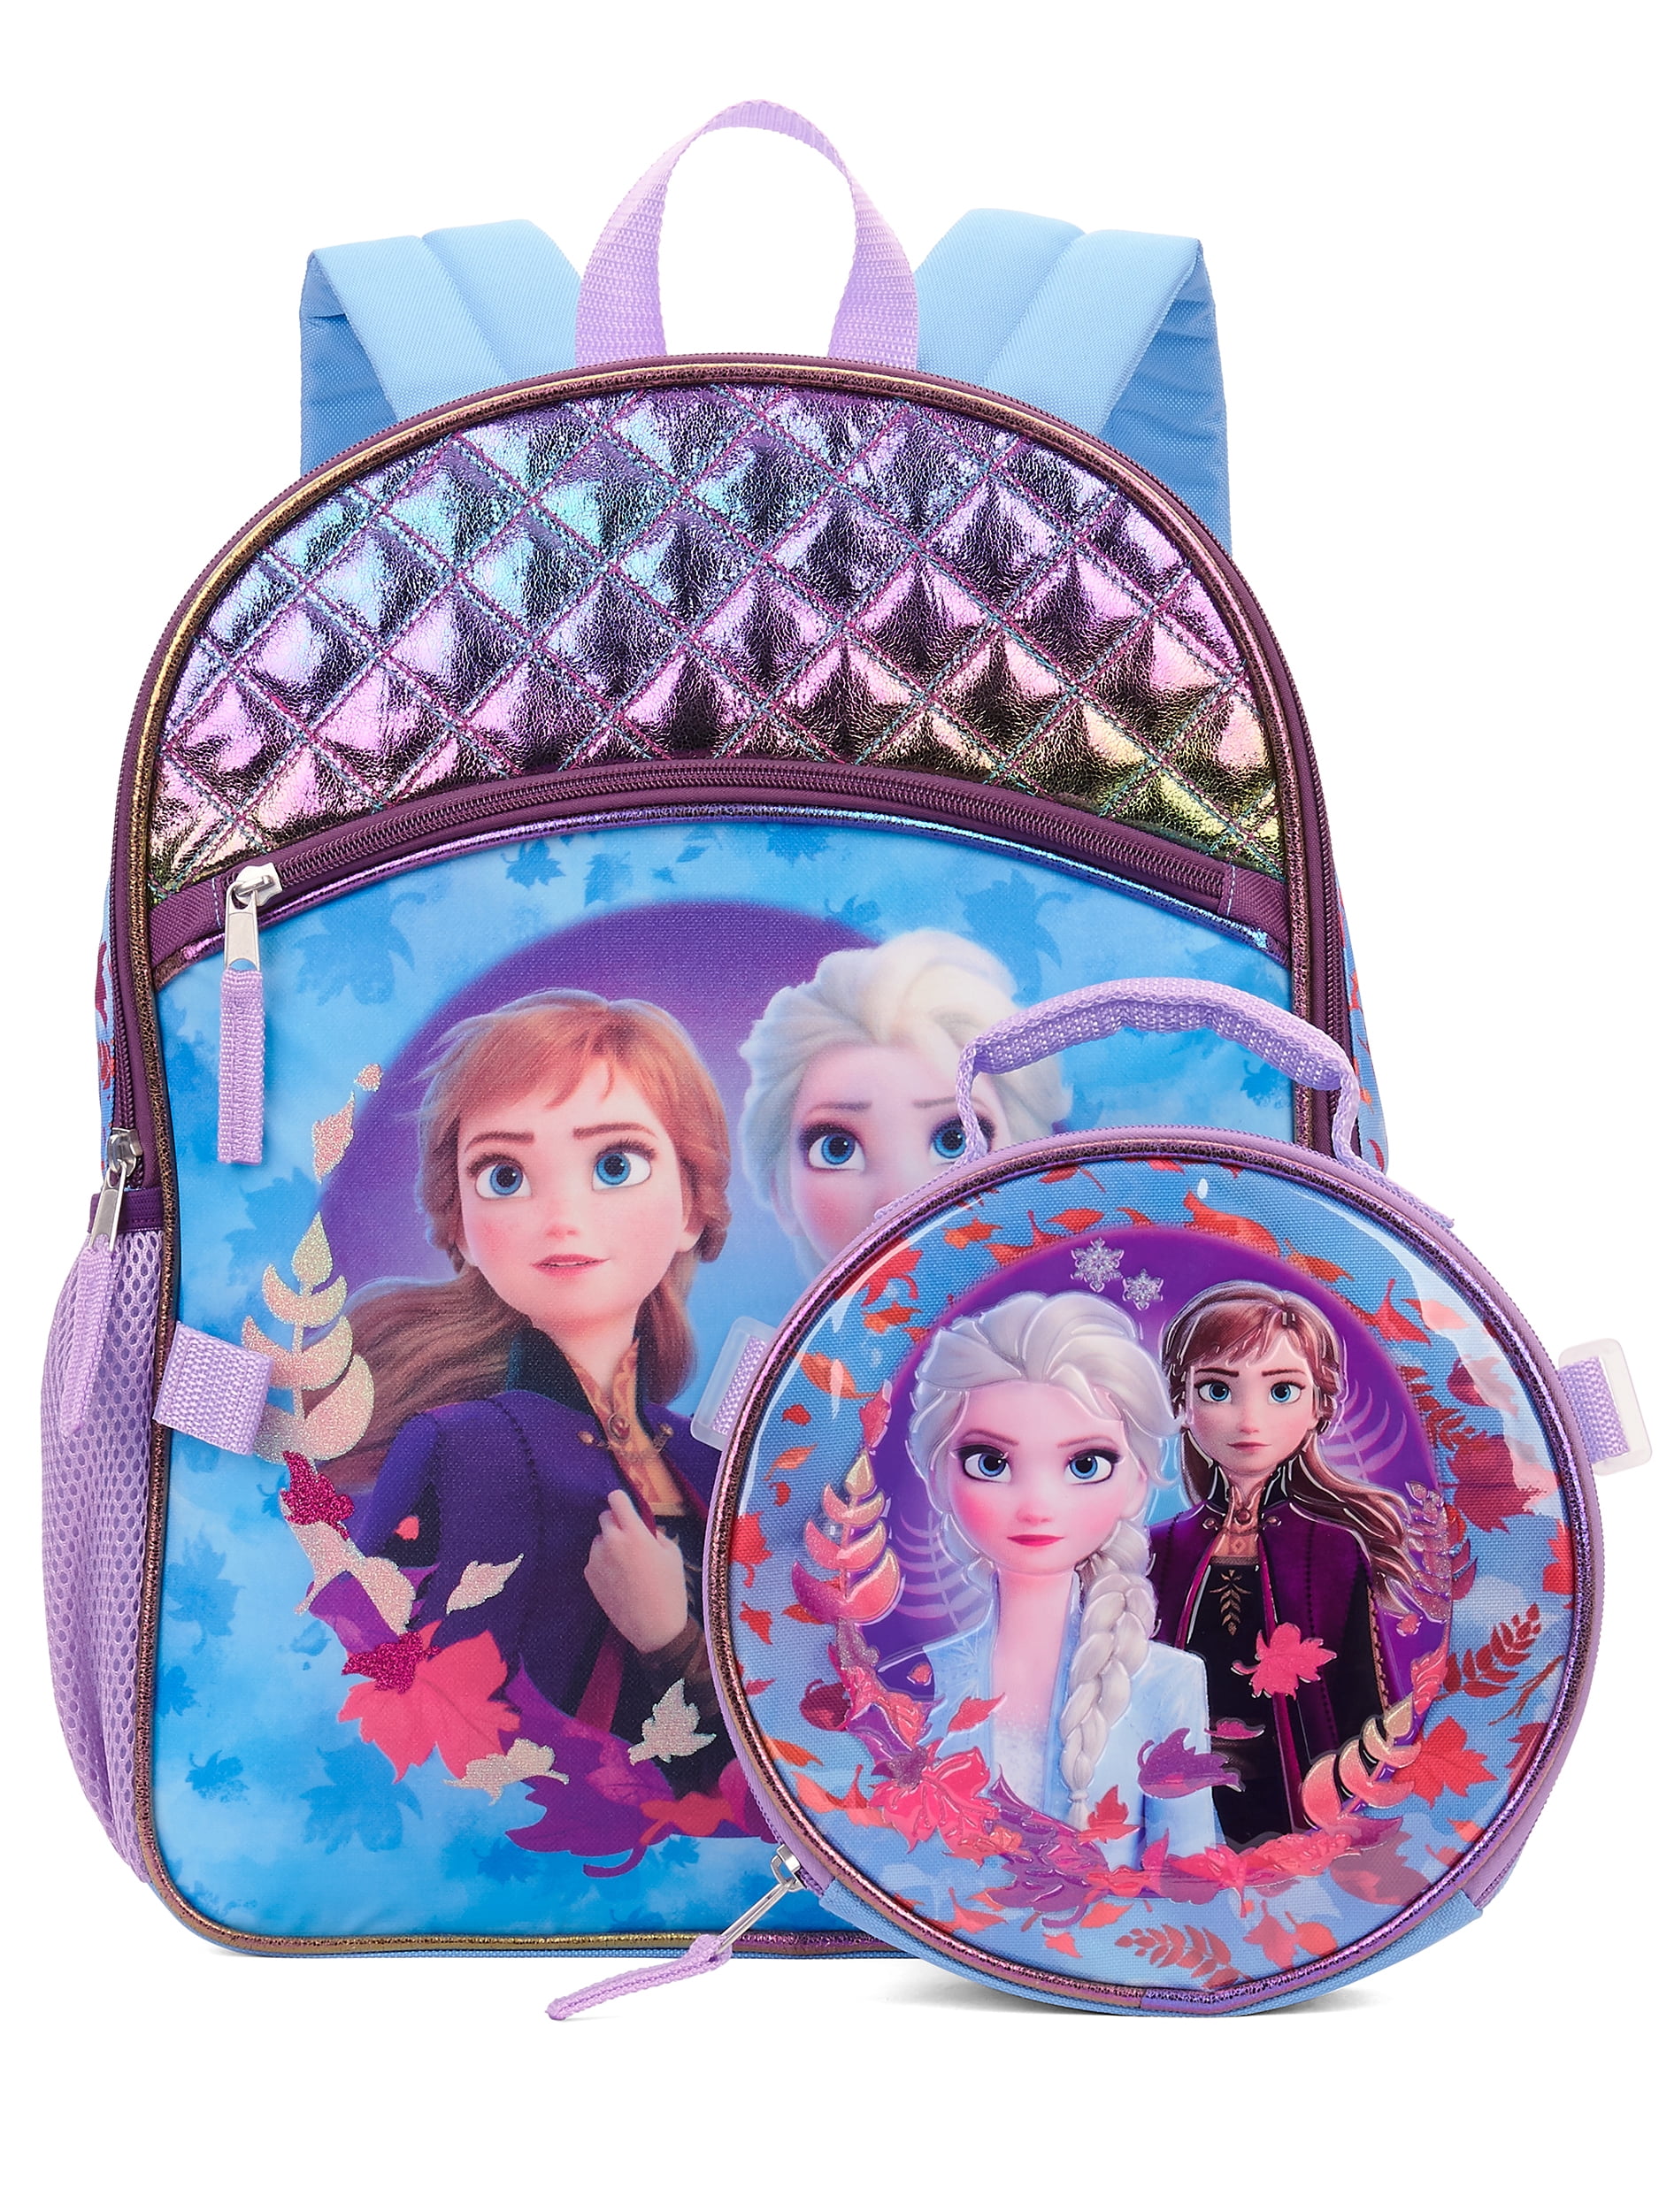 FROZEN 2 Backpack Nursery School Official Disney Backpack Anna & Elsa 3D Effect 